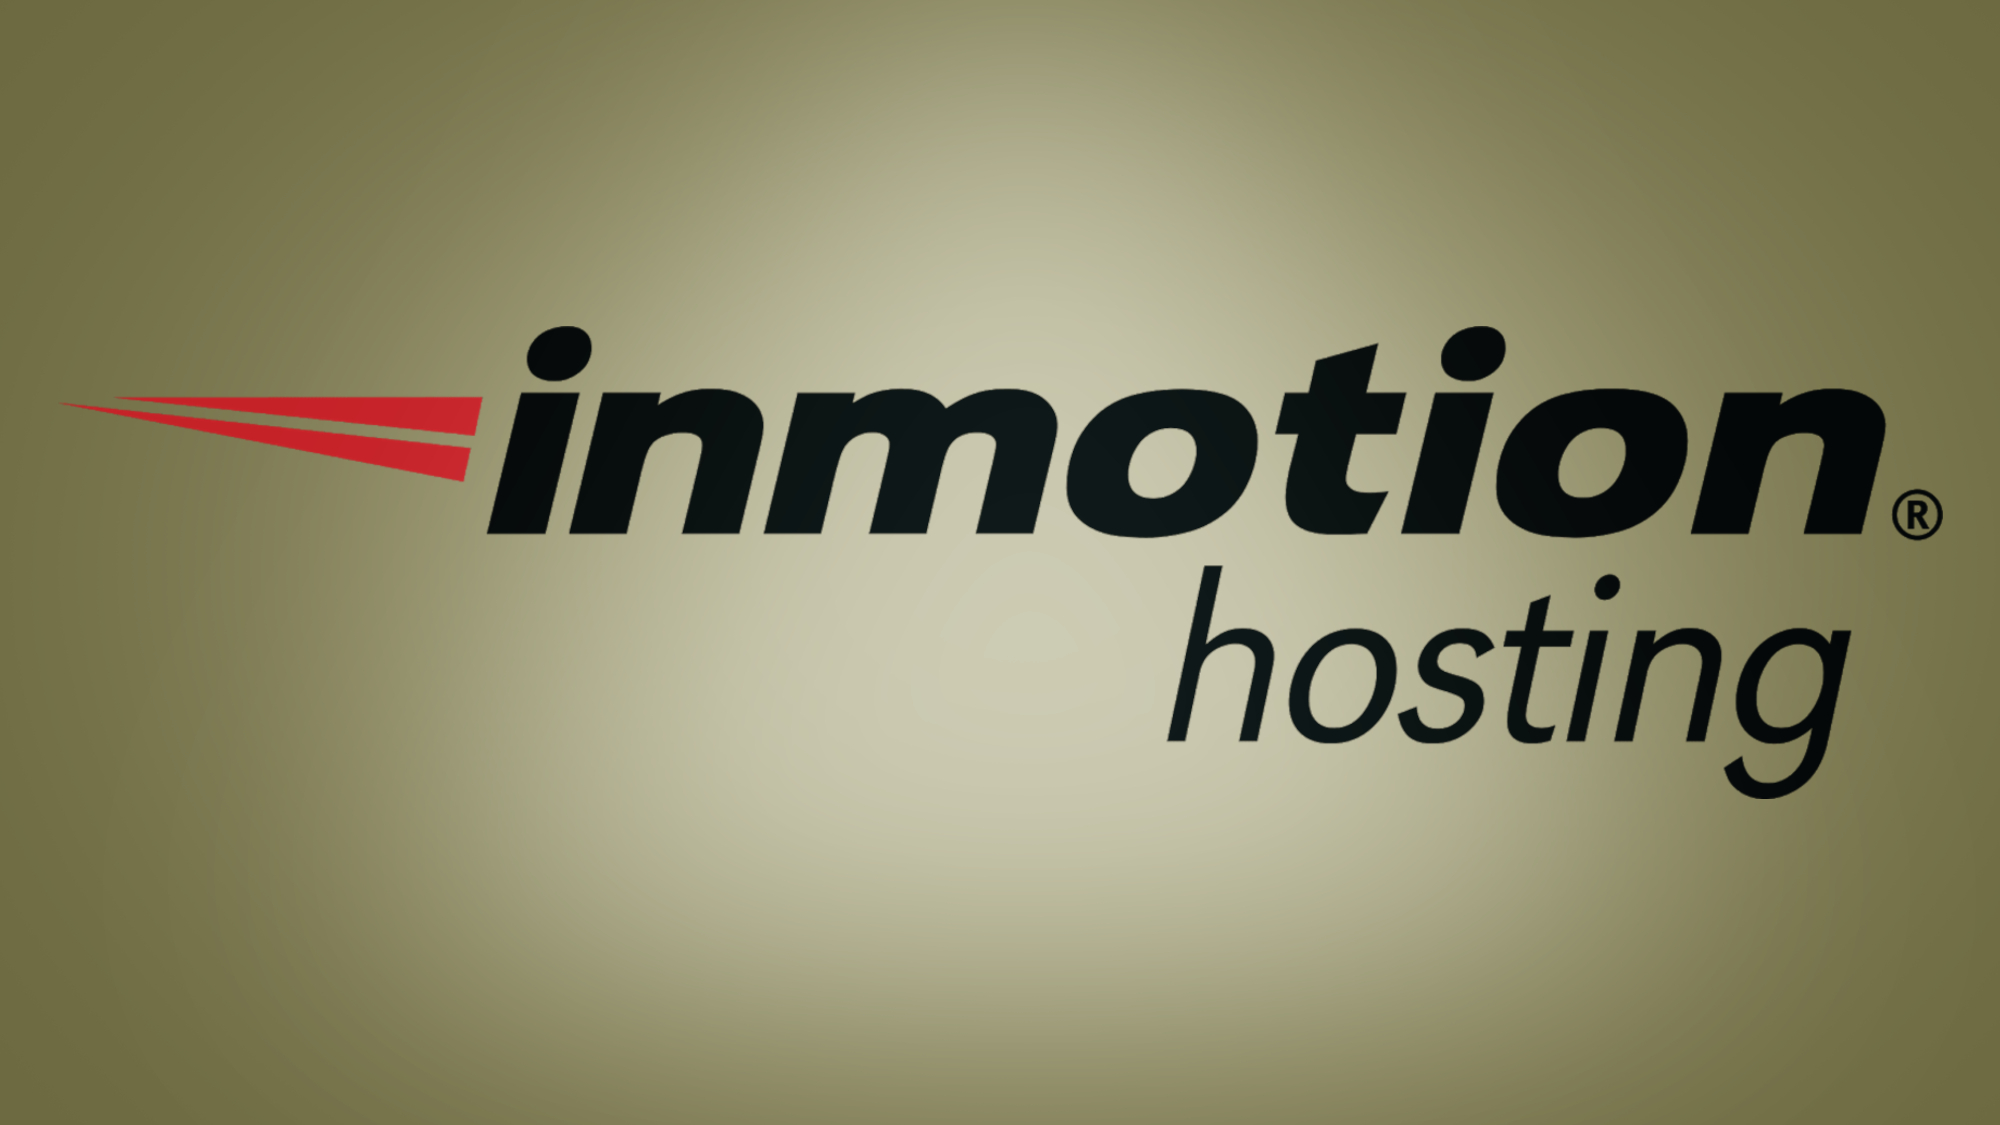 InMotion Hosting logo on green background